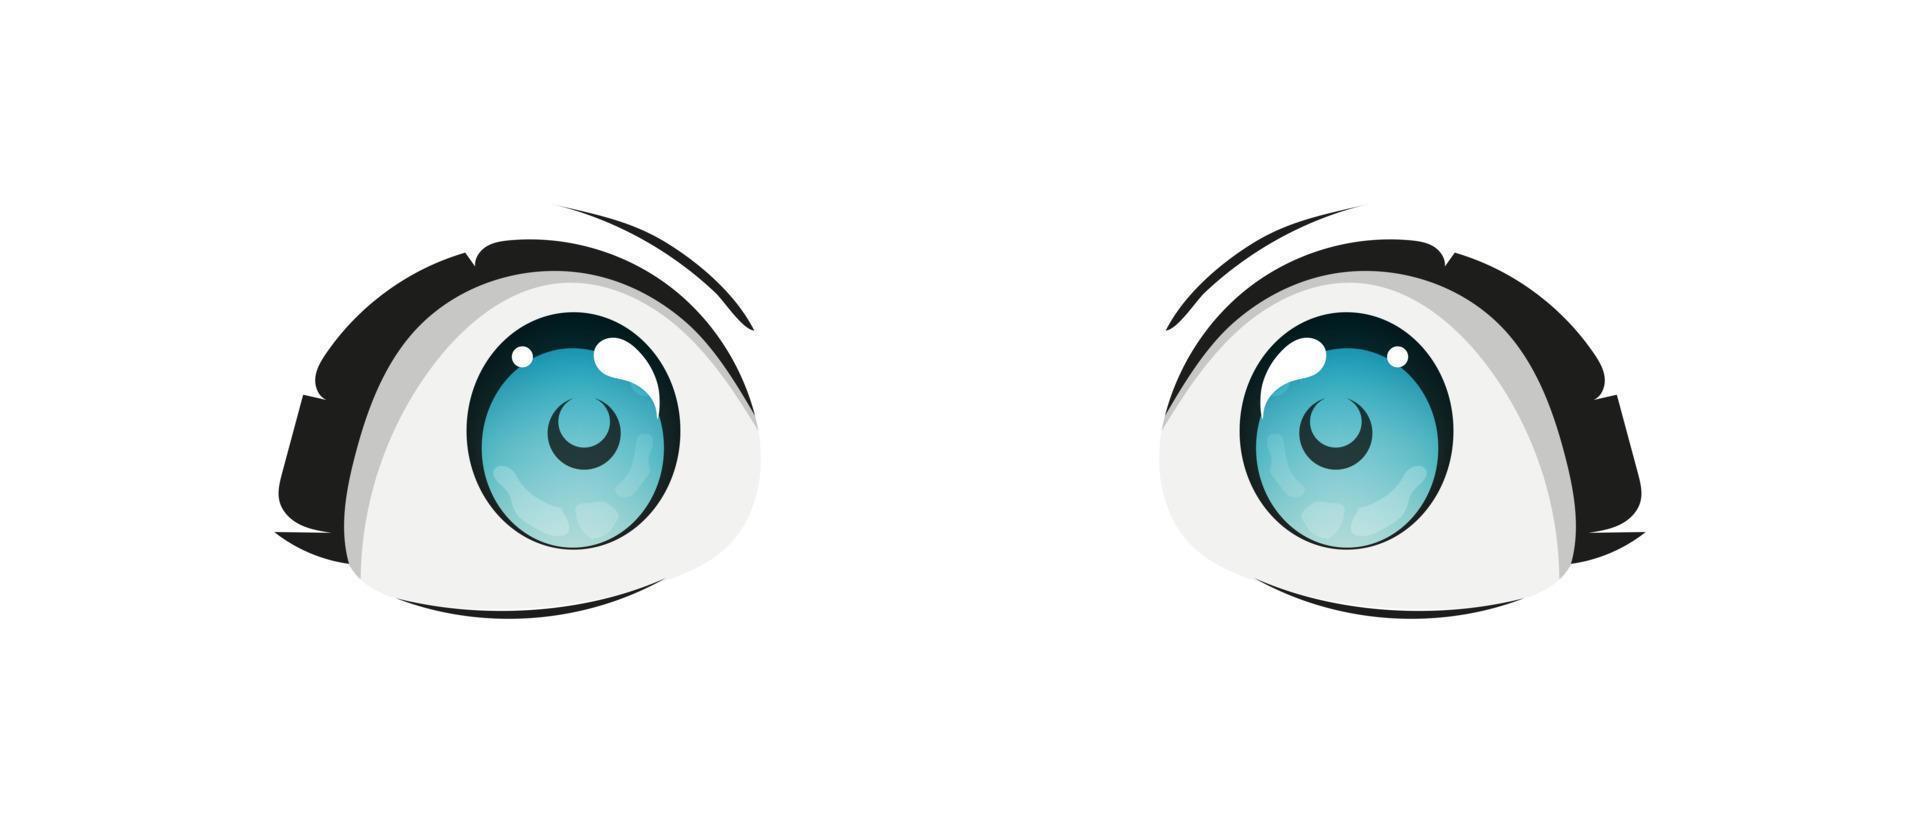 contento anime estilo grande azul ojos con destellos mano dibujado vector ilustración. aislado en blanco antecedentes.